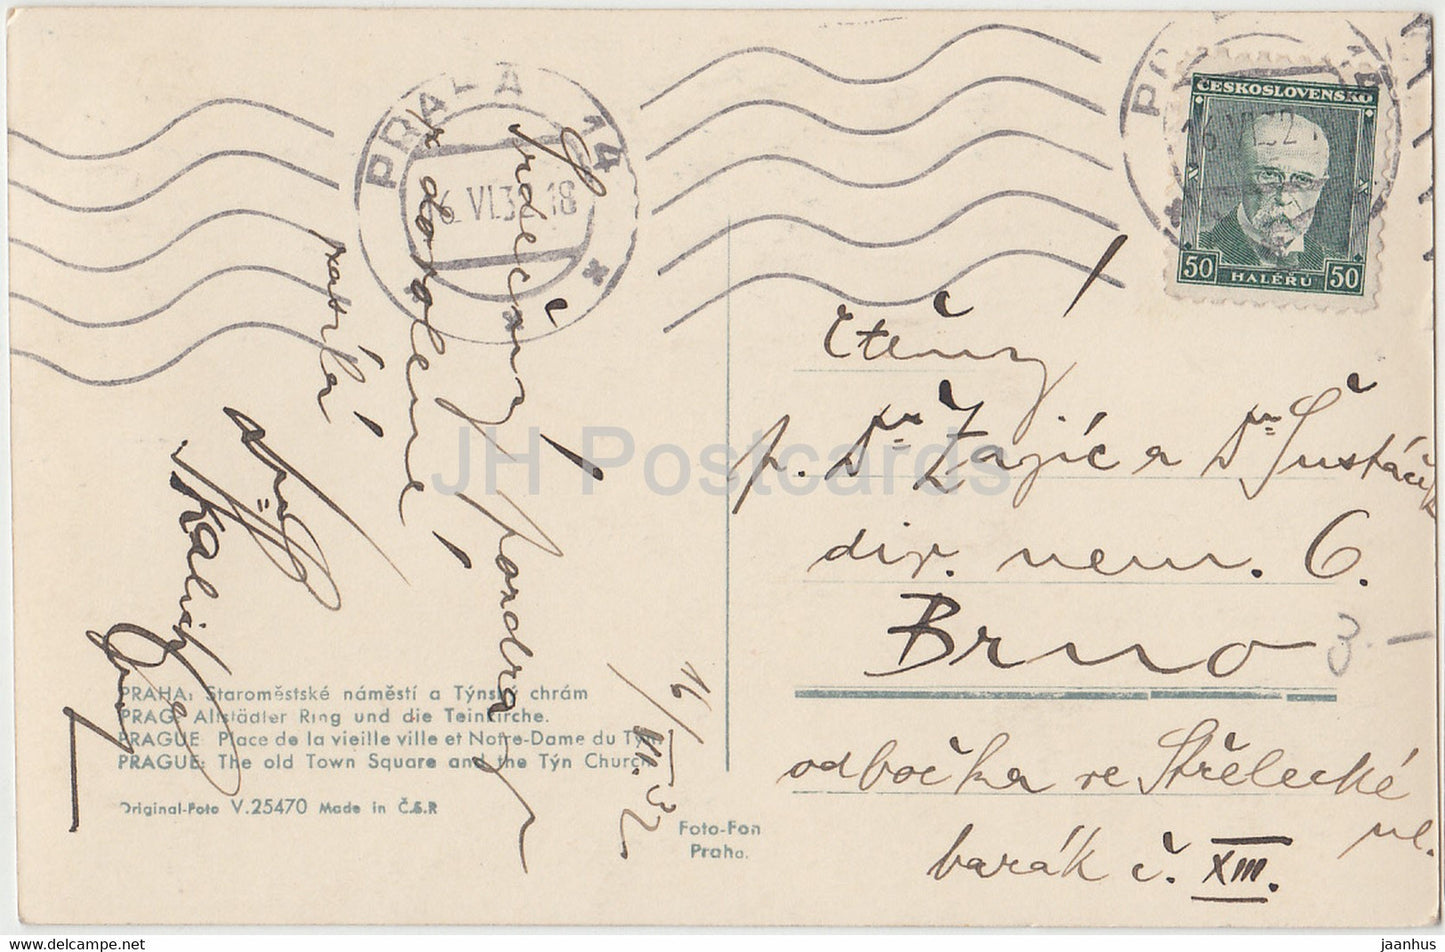 Praha - Prague - Staromestske namesti a Tynsky Chram - old postcard -  1932 - Czechoslovakia - Czech Republic - used